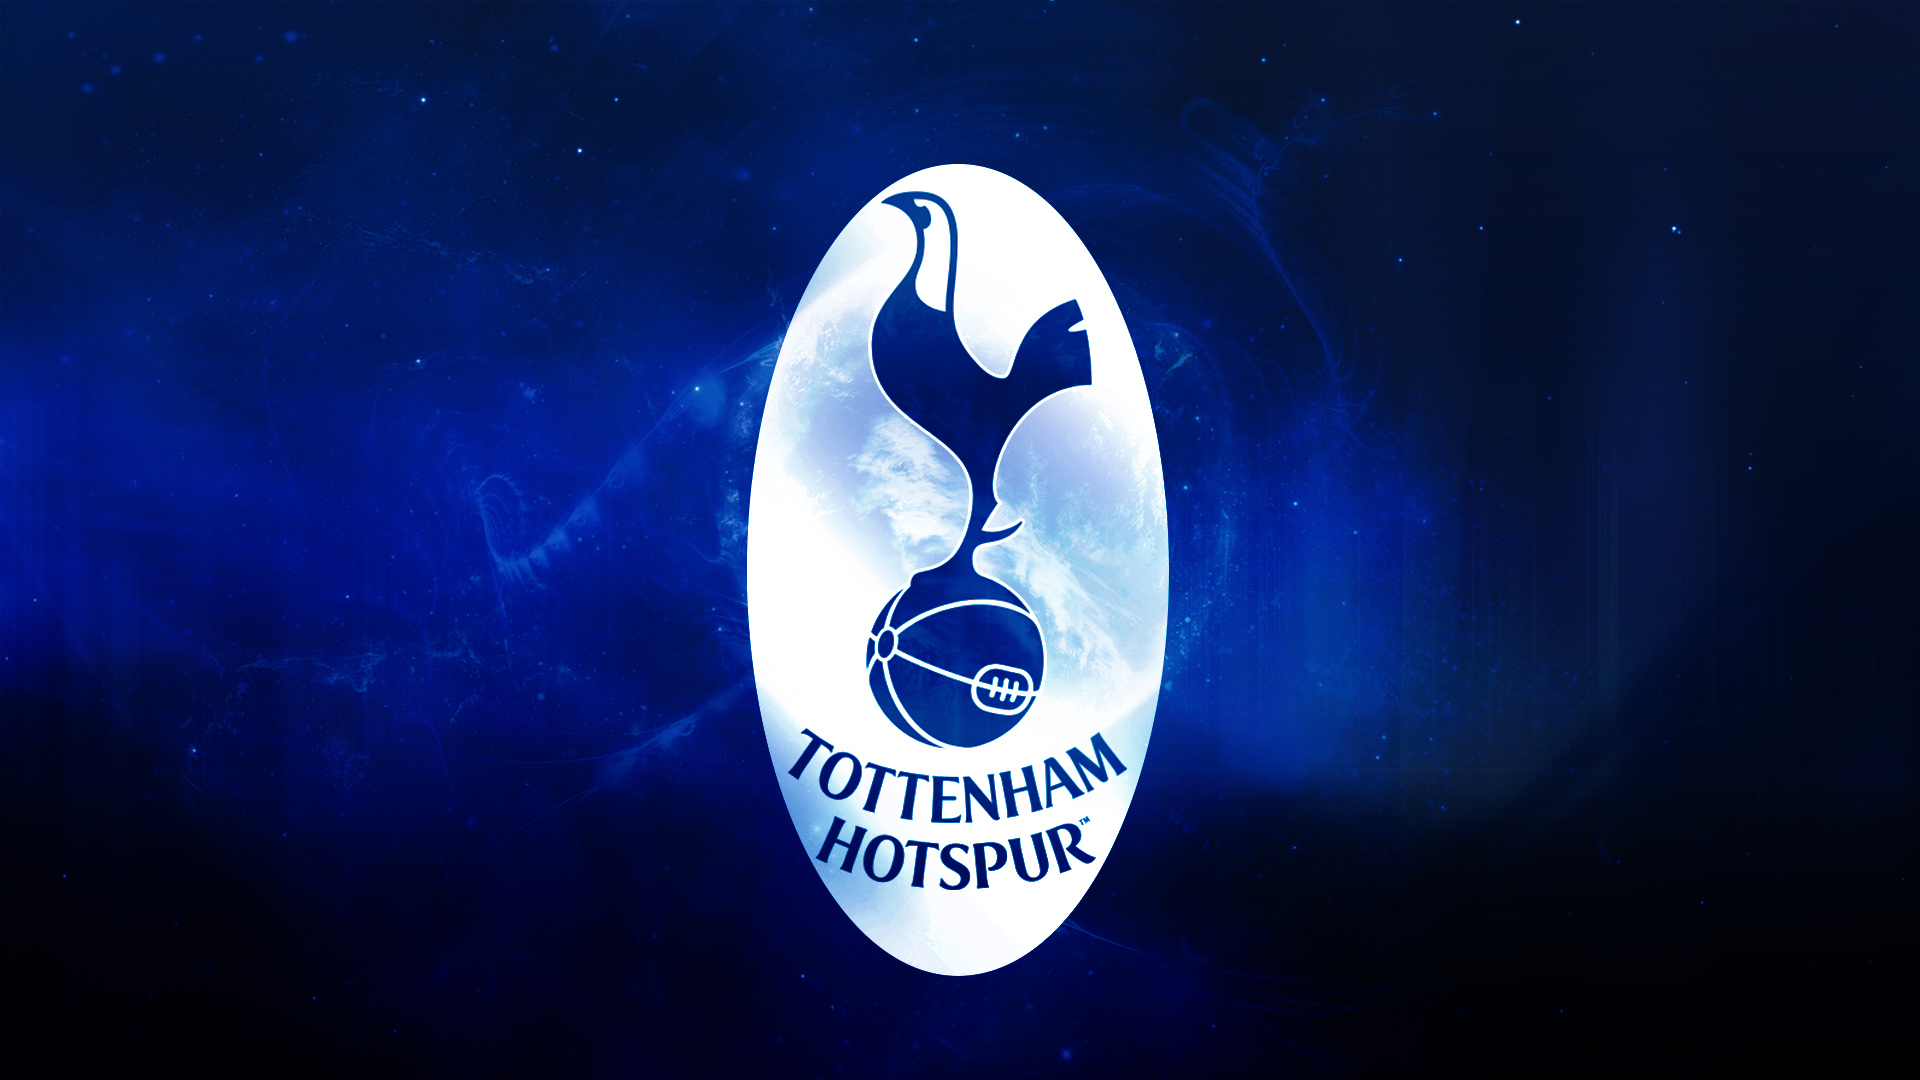 Tottenham Spurs wallpaper by tsgraphic on DeviantArt